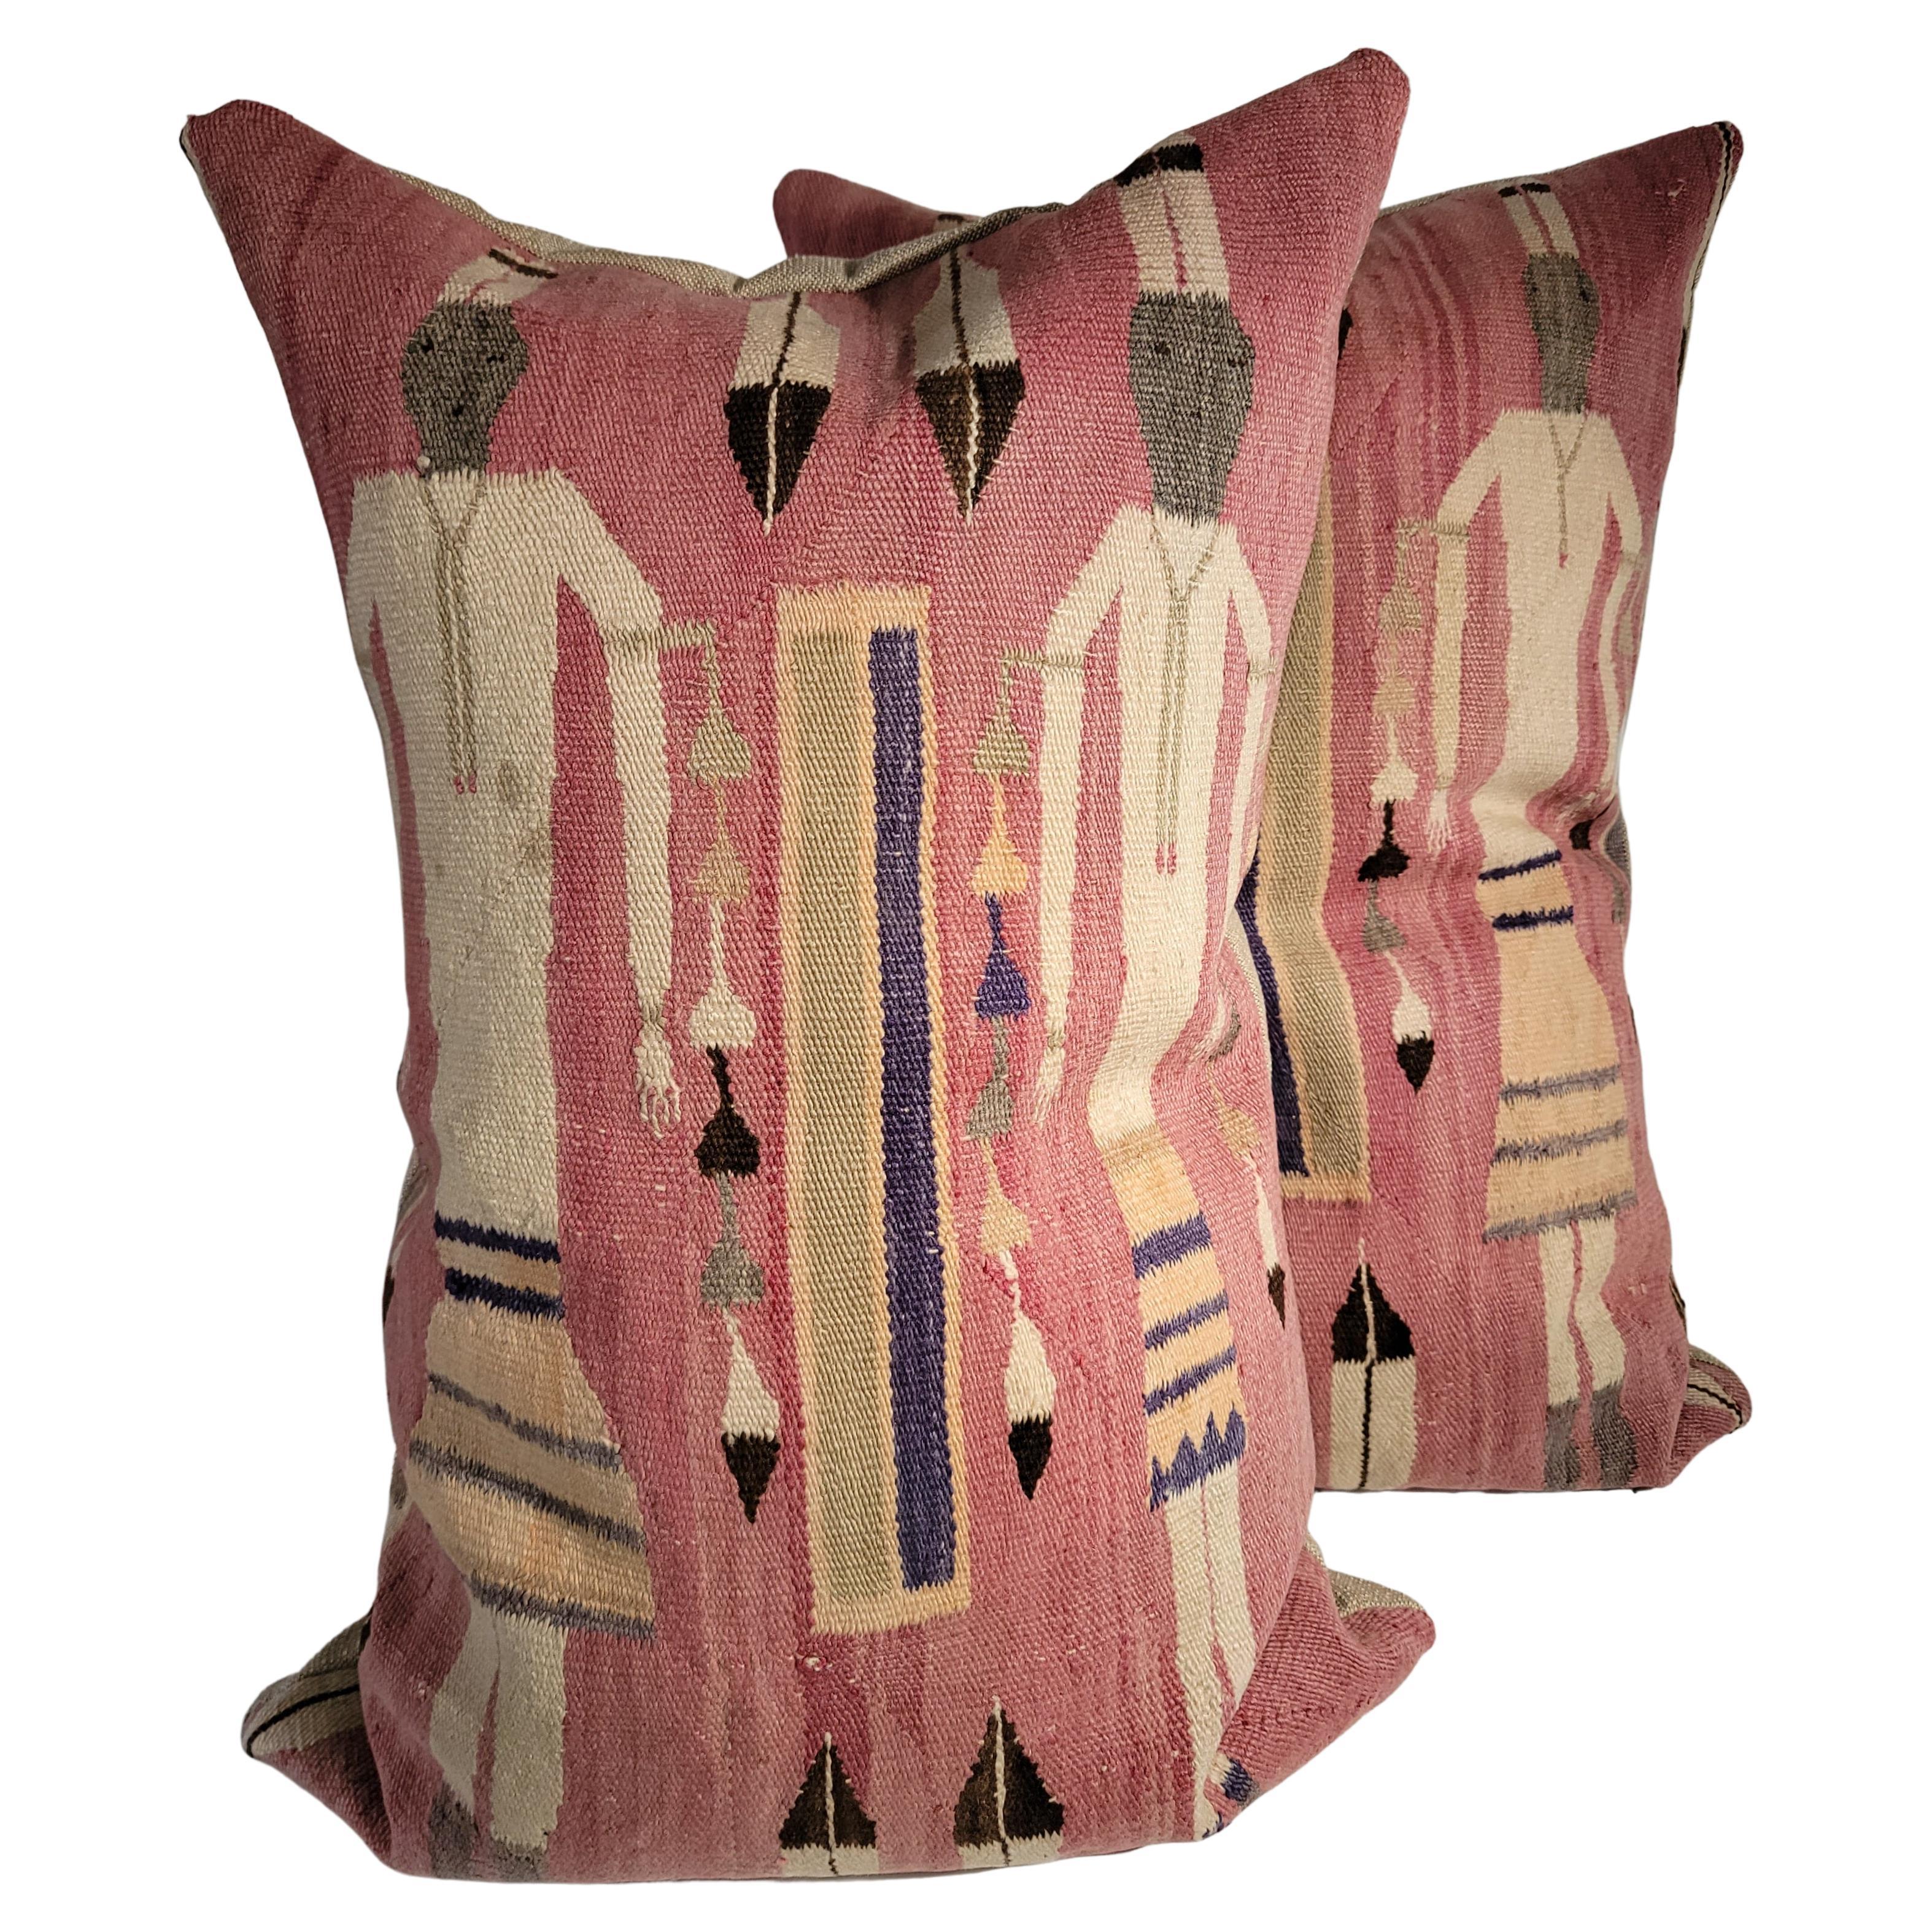 Navajo Indian Weaving Pillows, Yei, Pair